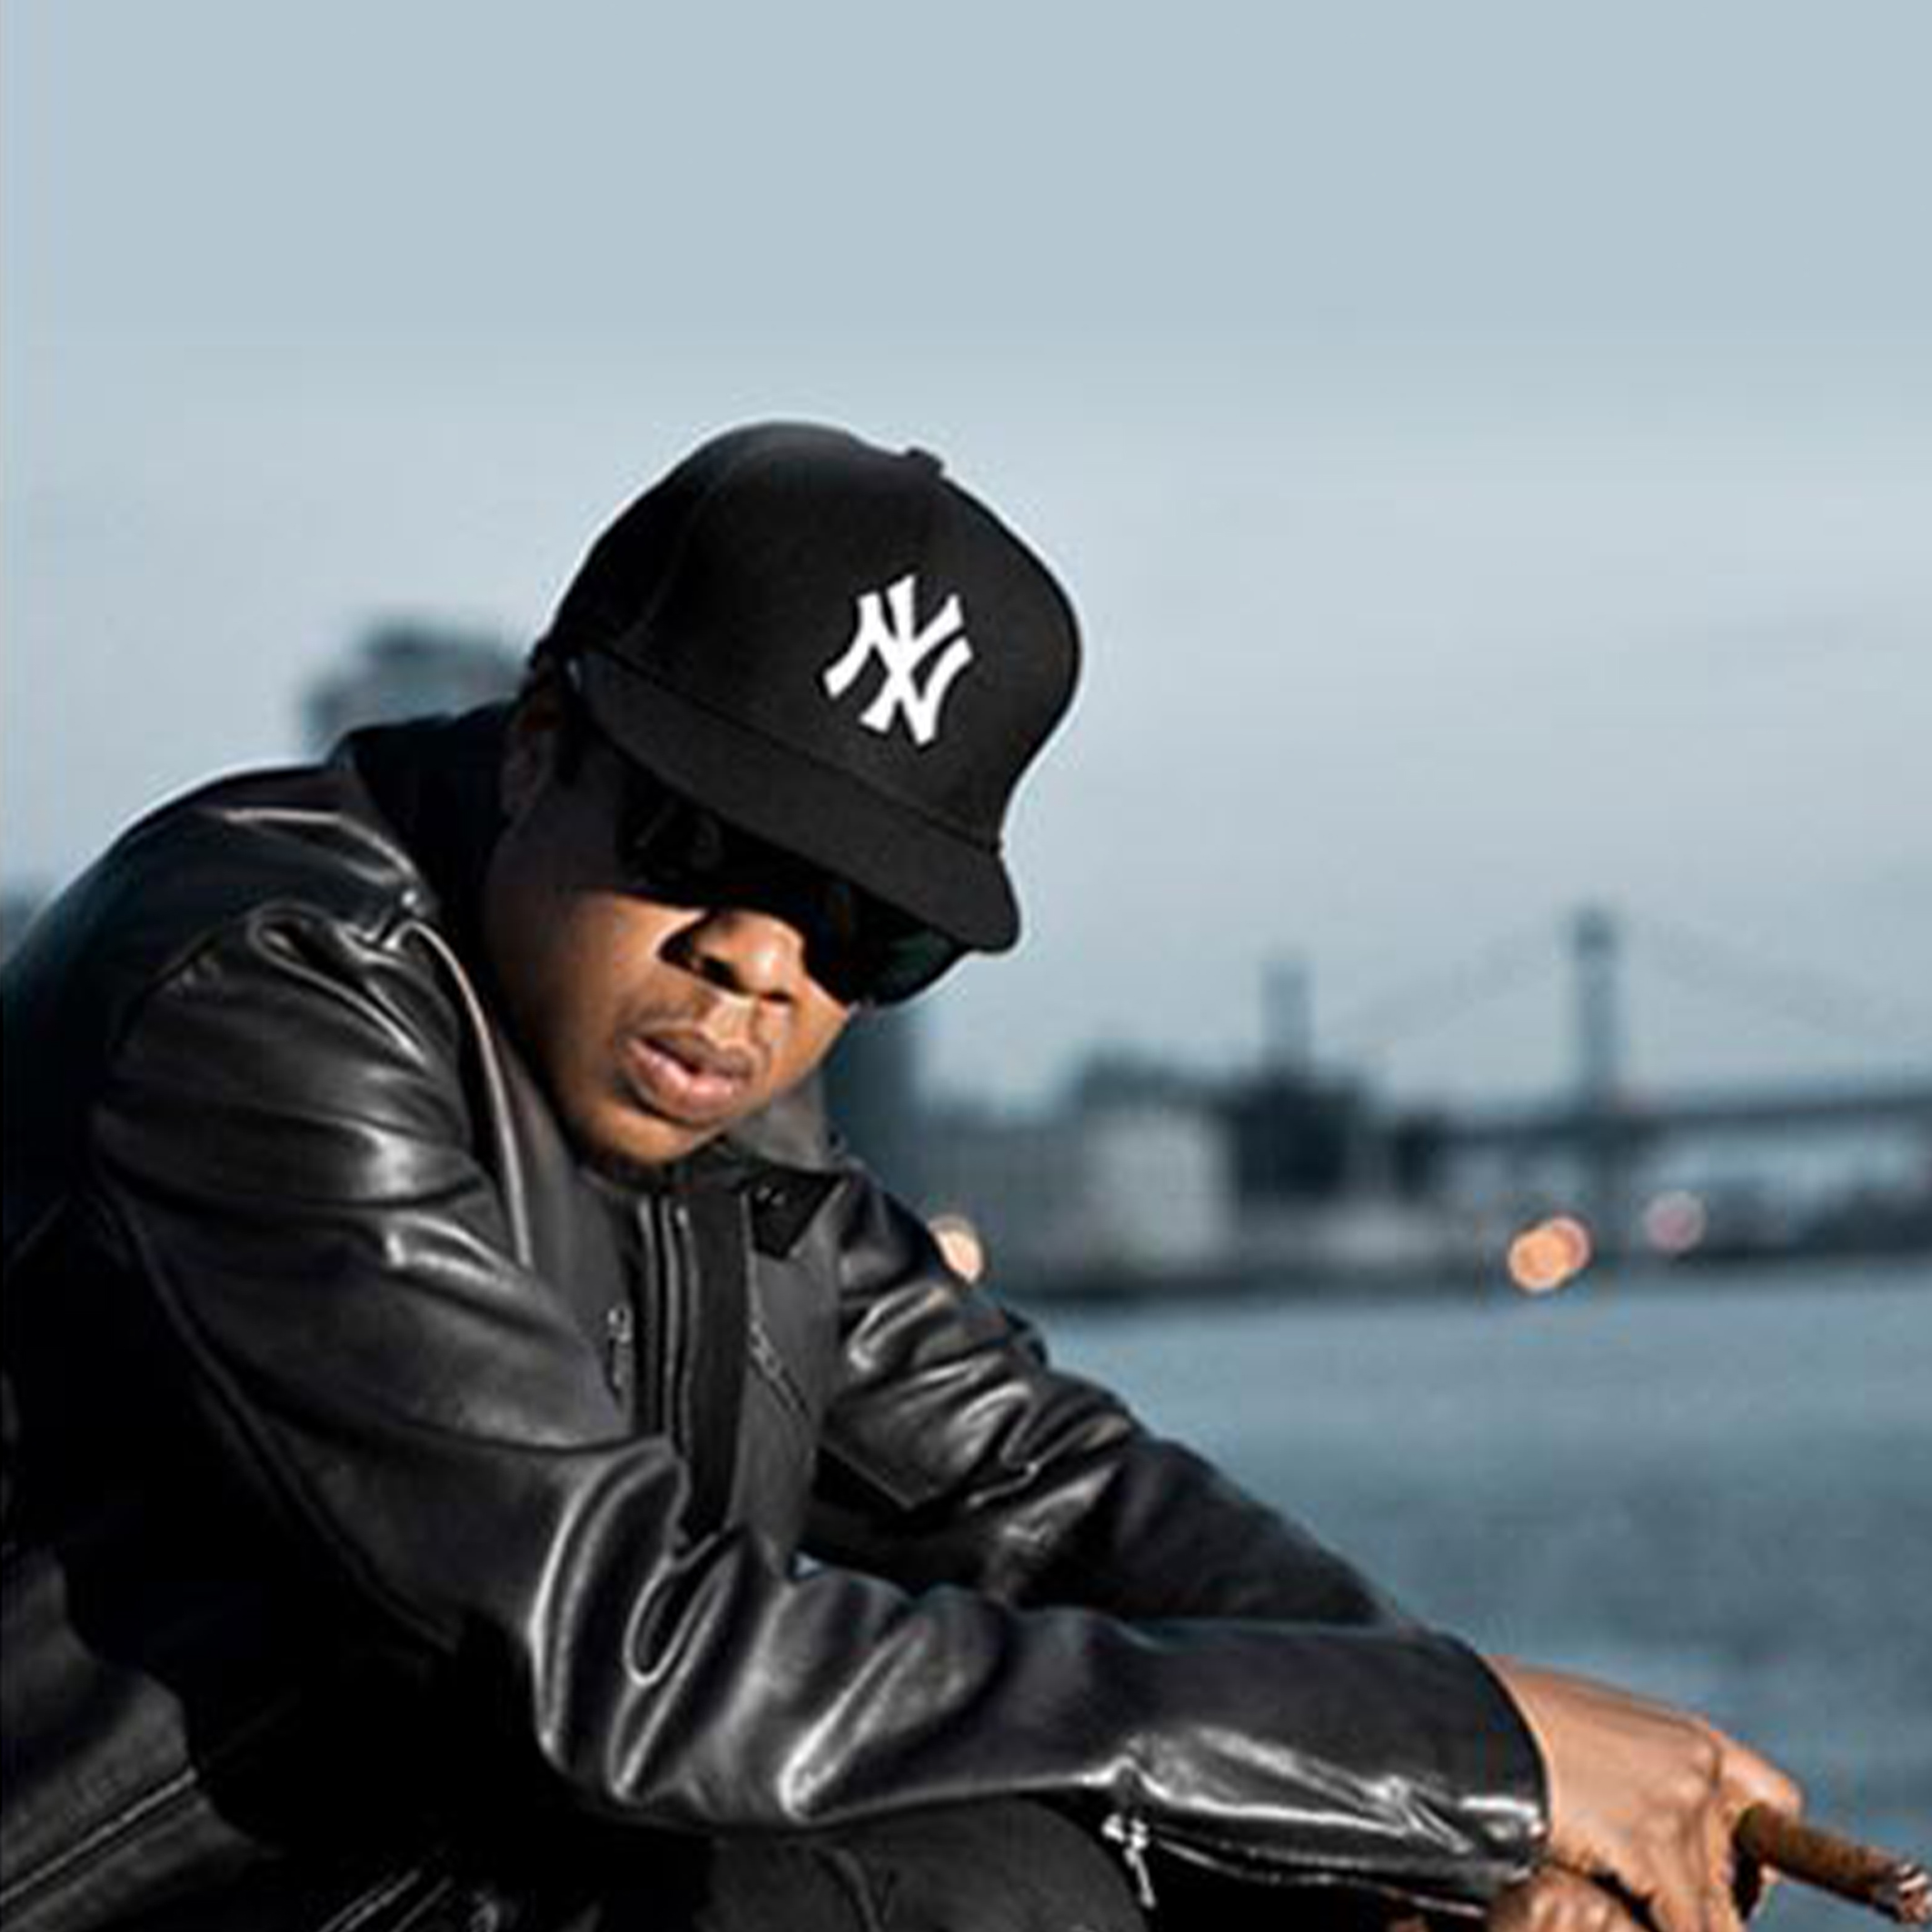 Jay Z to release new album 4:44 via Tidal and Sprint telephony company